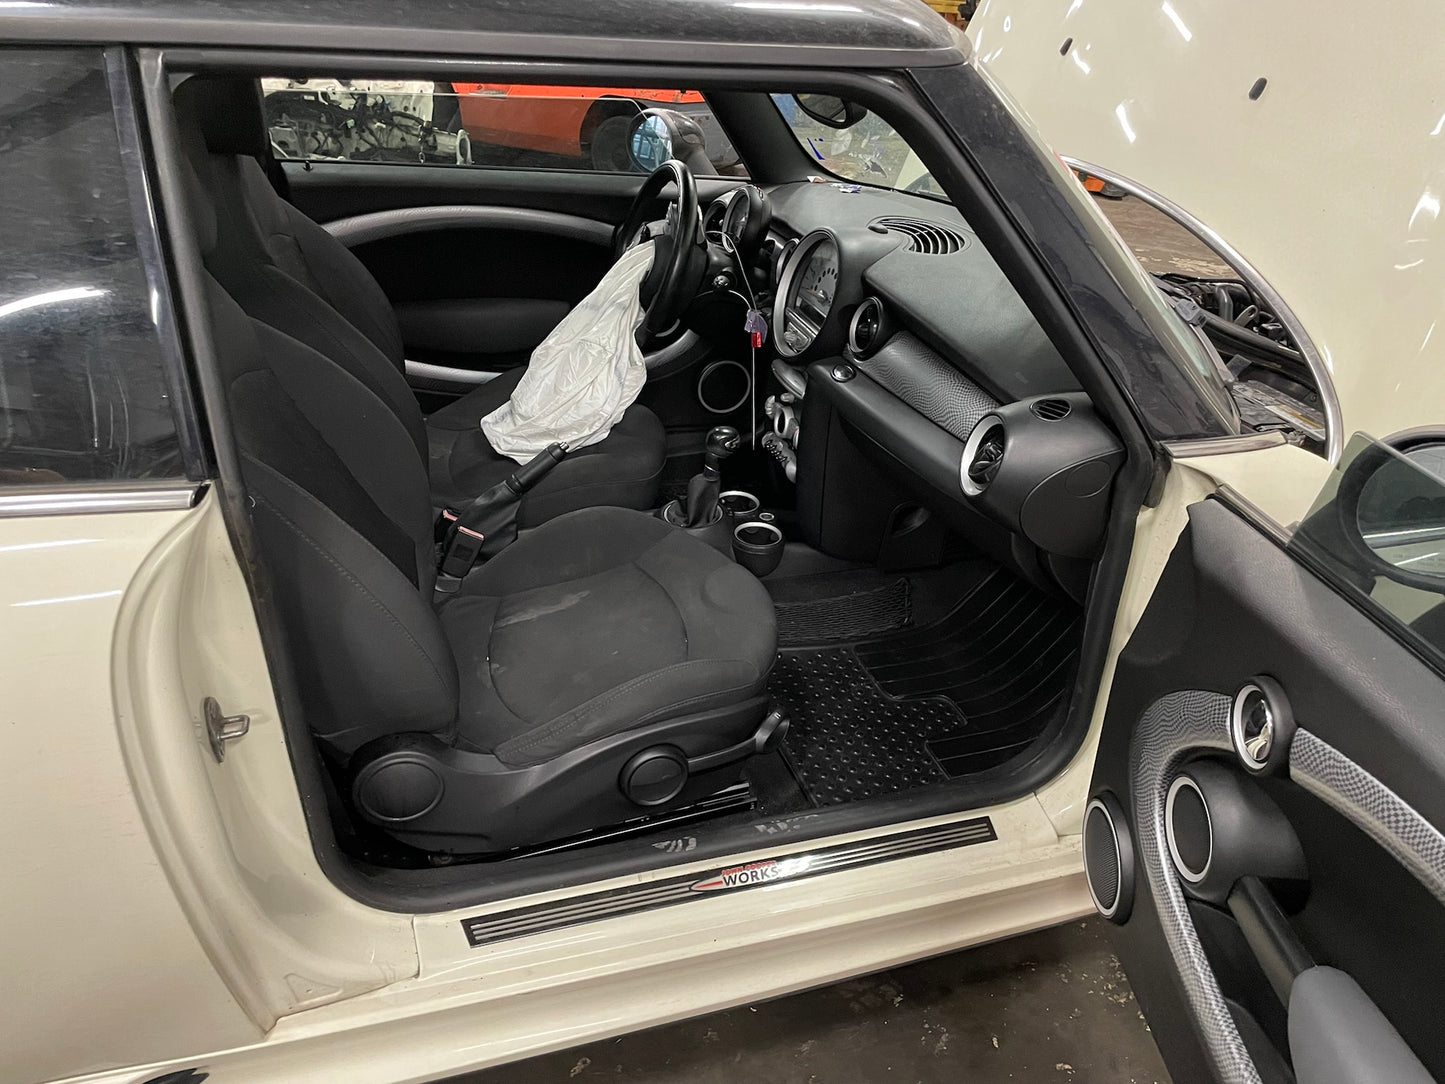 2010 MINI Cooper Hatchback S, New Parts Car (January 2022) Stk # 275